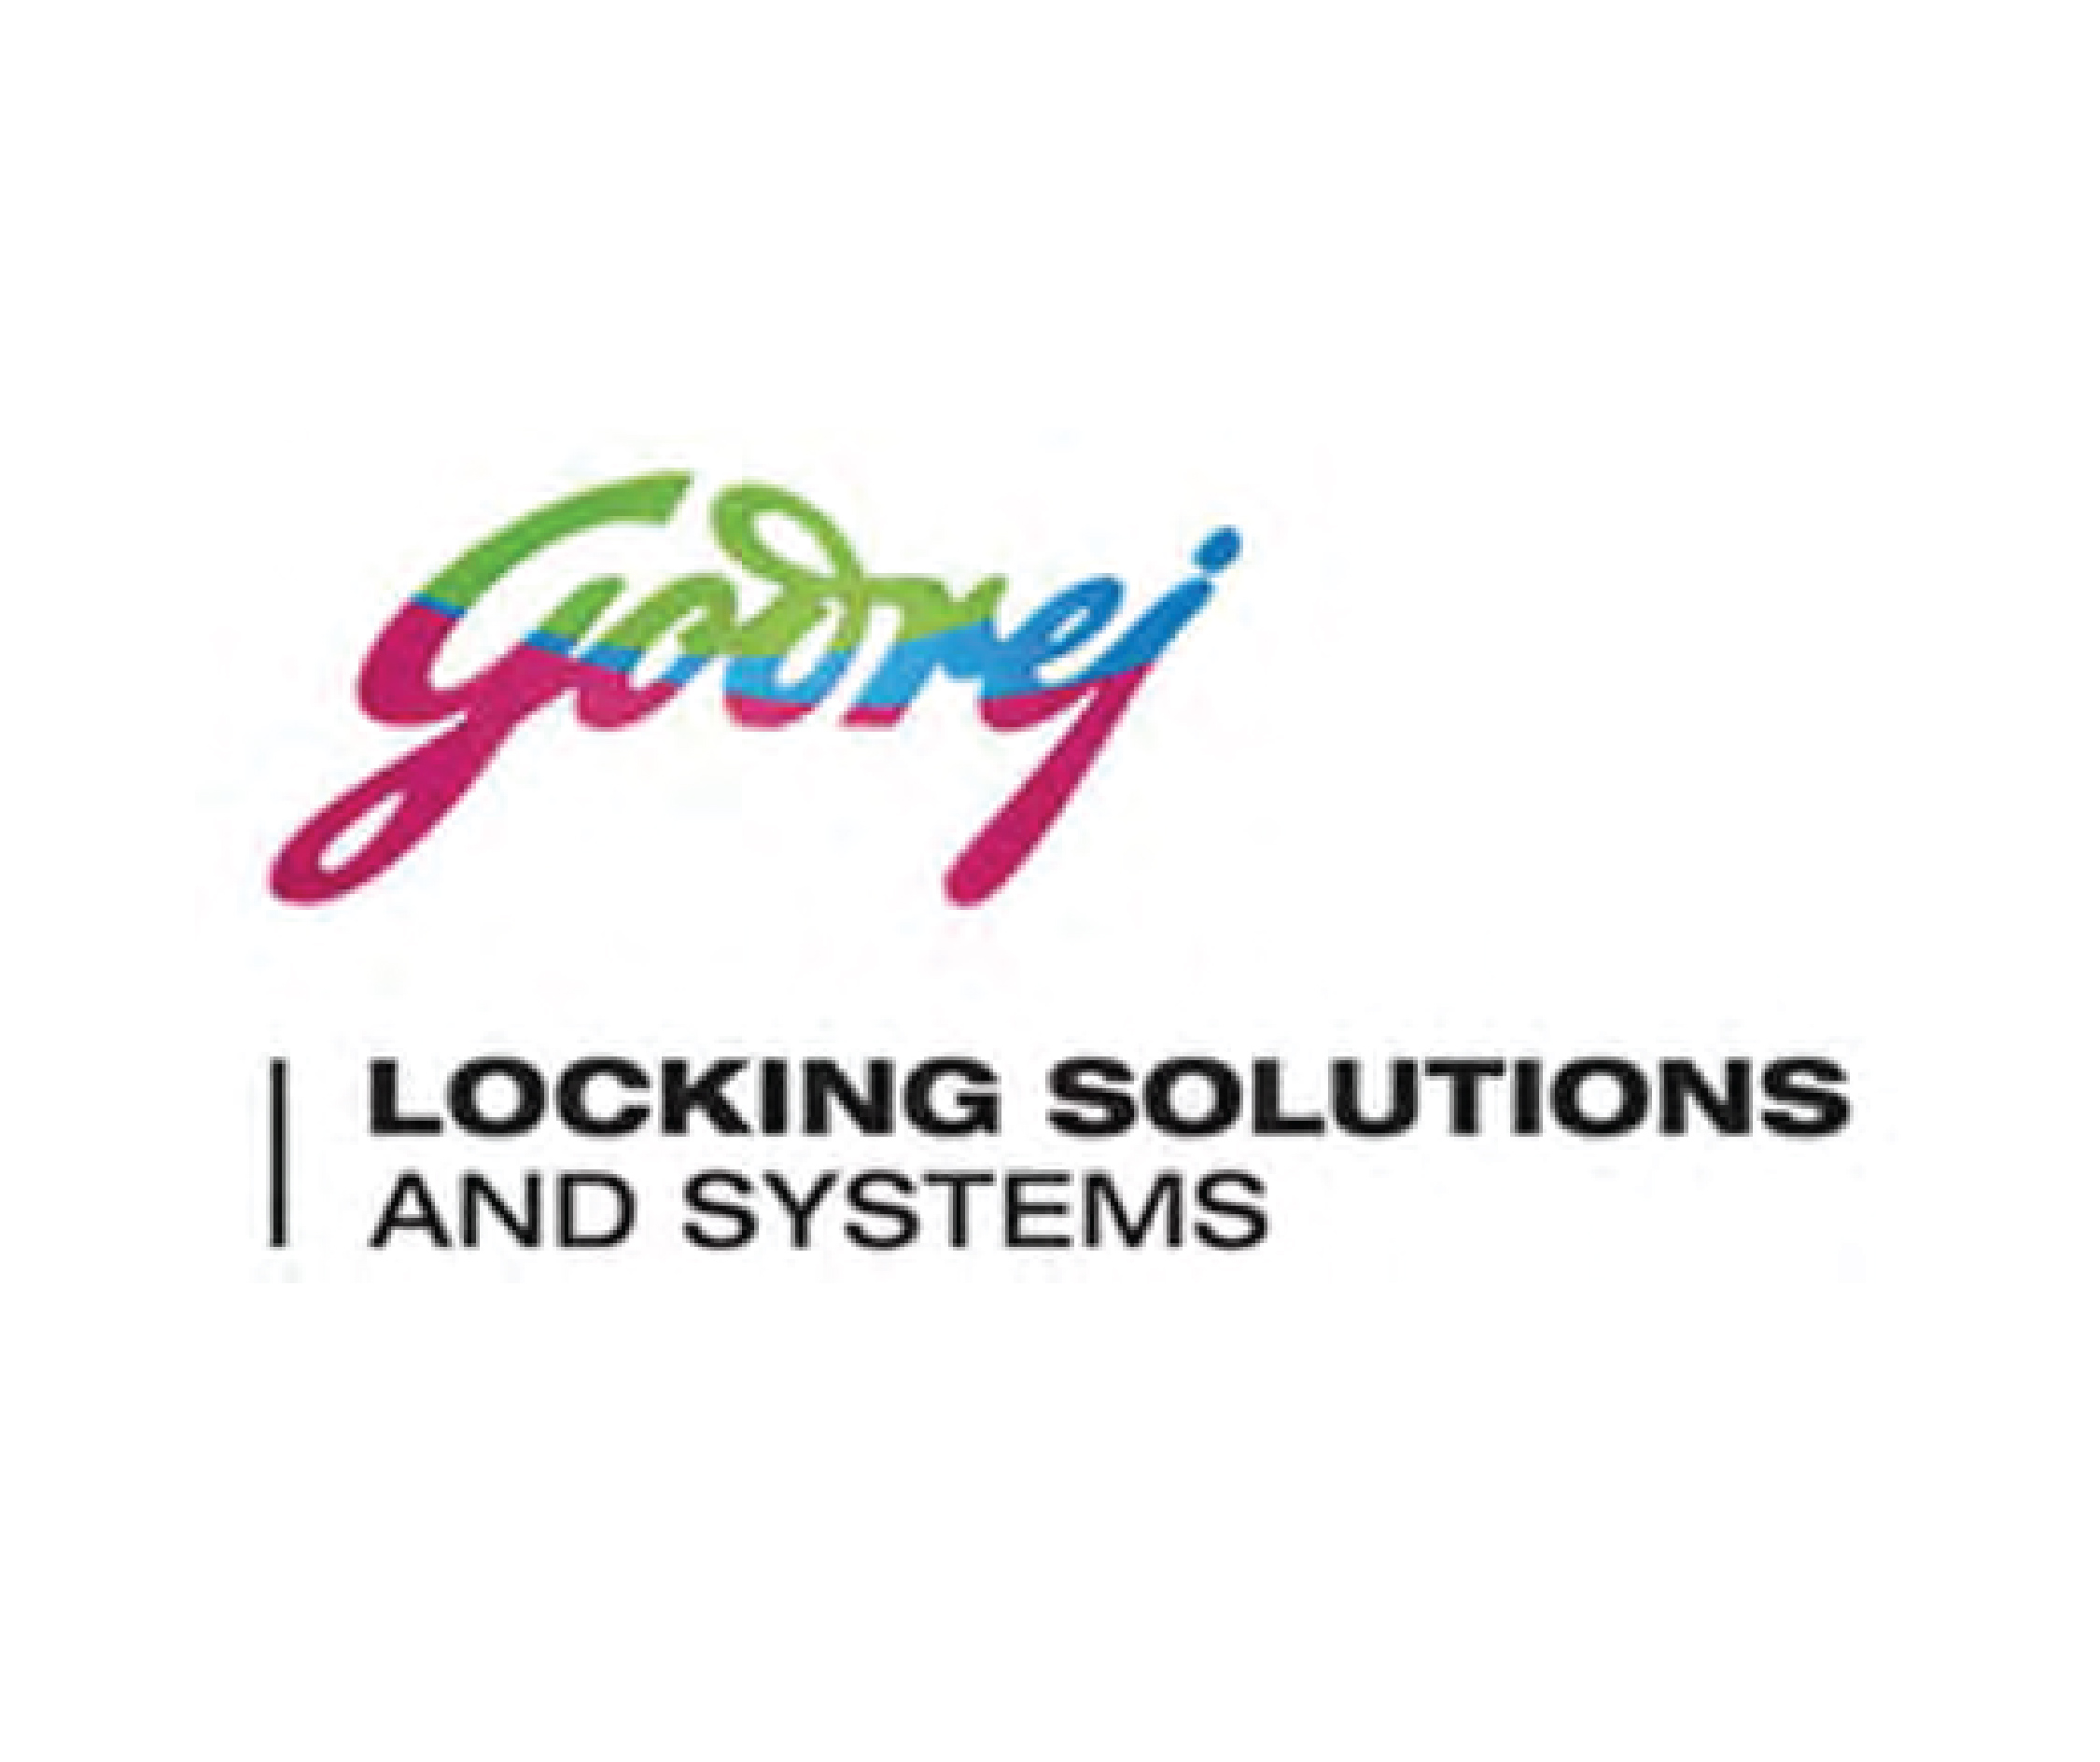  Locks & Security Solutions - Godrej Construction partner with Sowparnika Jazzmyna